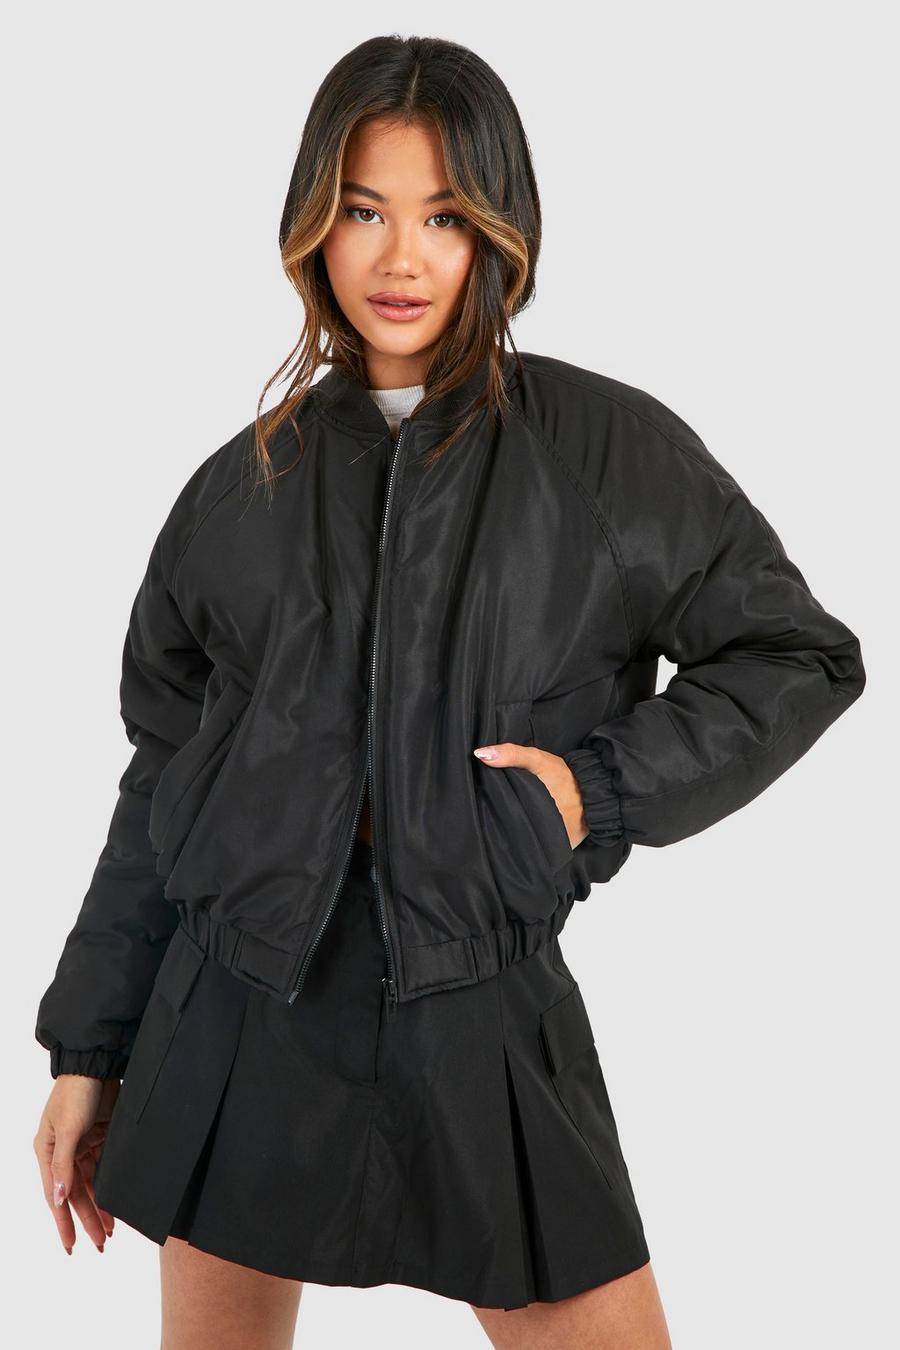 Black ajmone suede buttoned shirt jacket item 